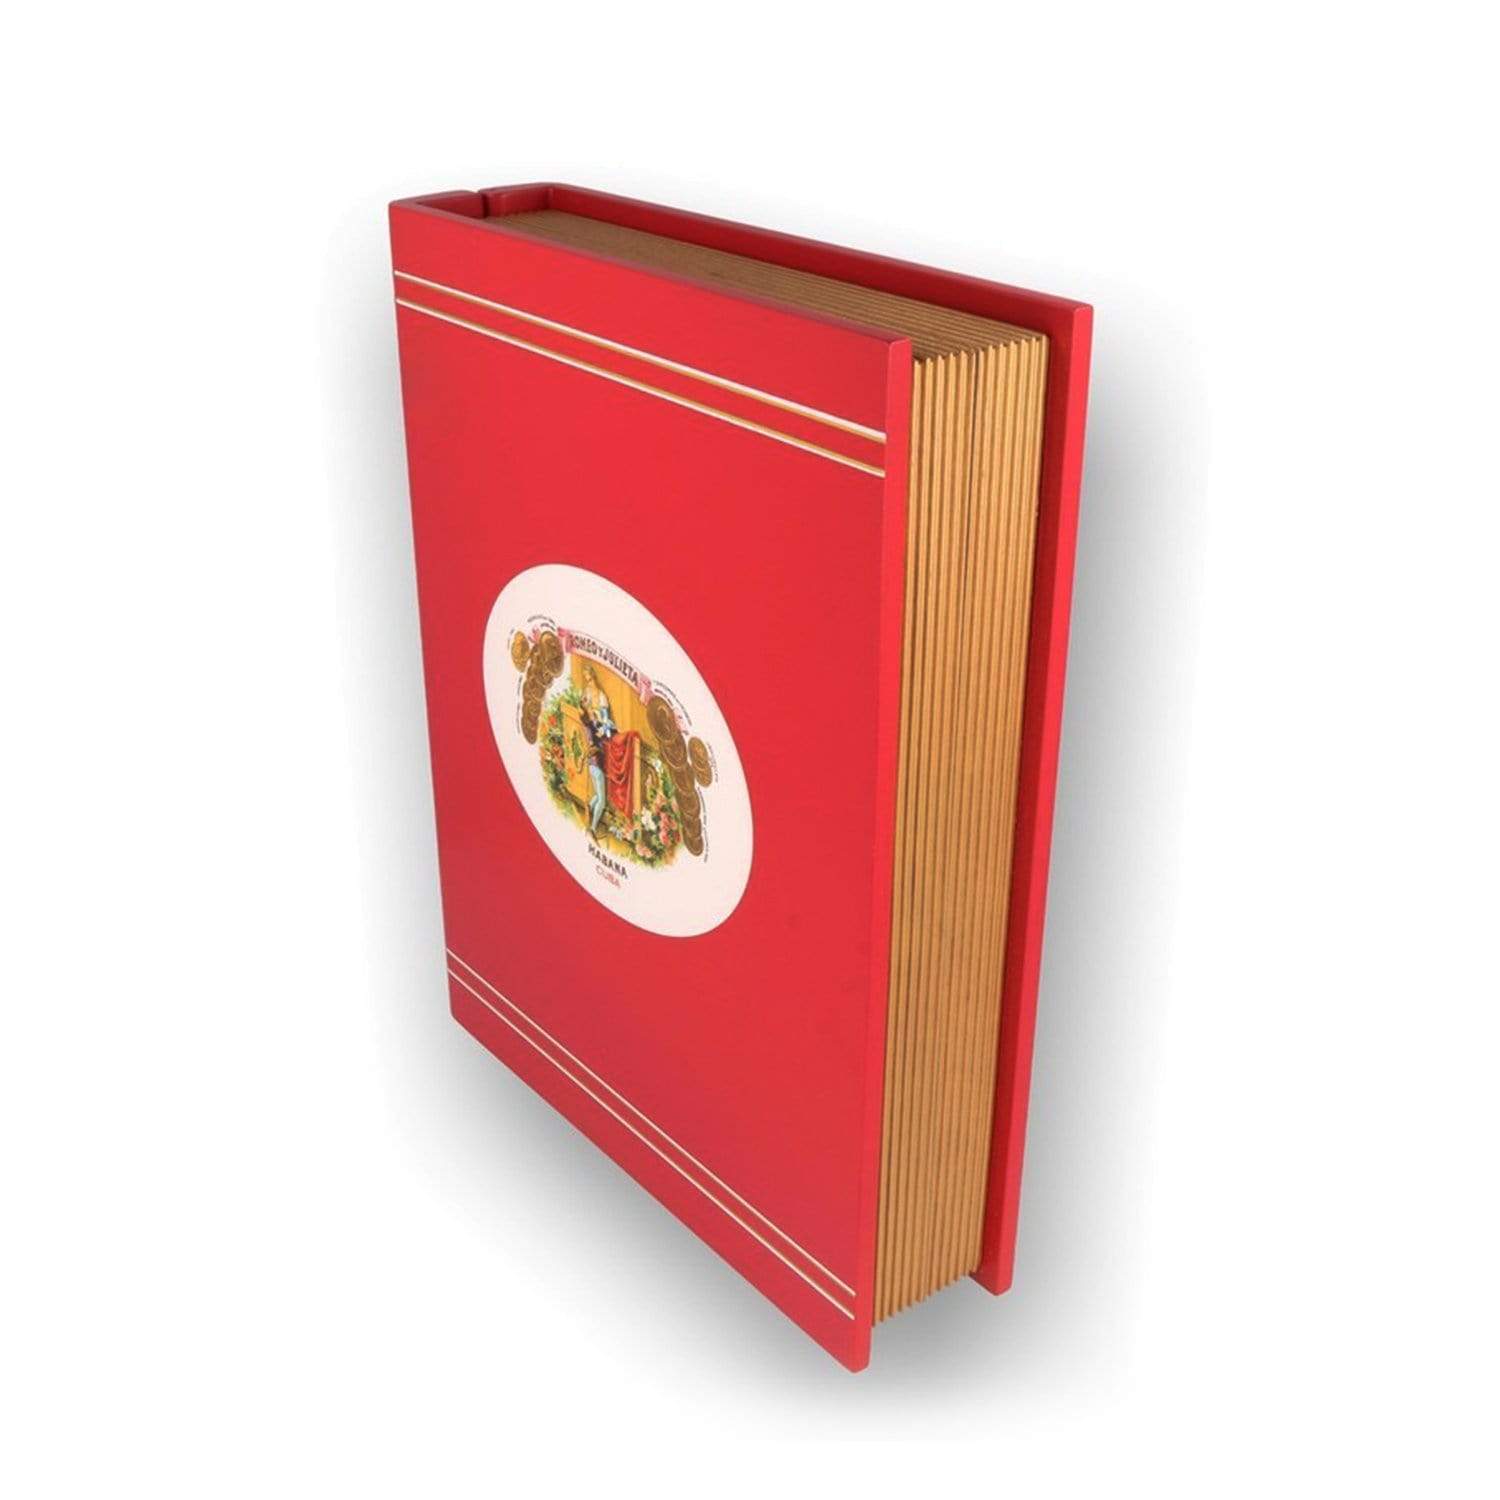 HABANOS ACCESSORIES Red / 33 x 26 x 9 cm HUMIDOR BOOK ROMEO Y JULIETA